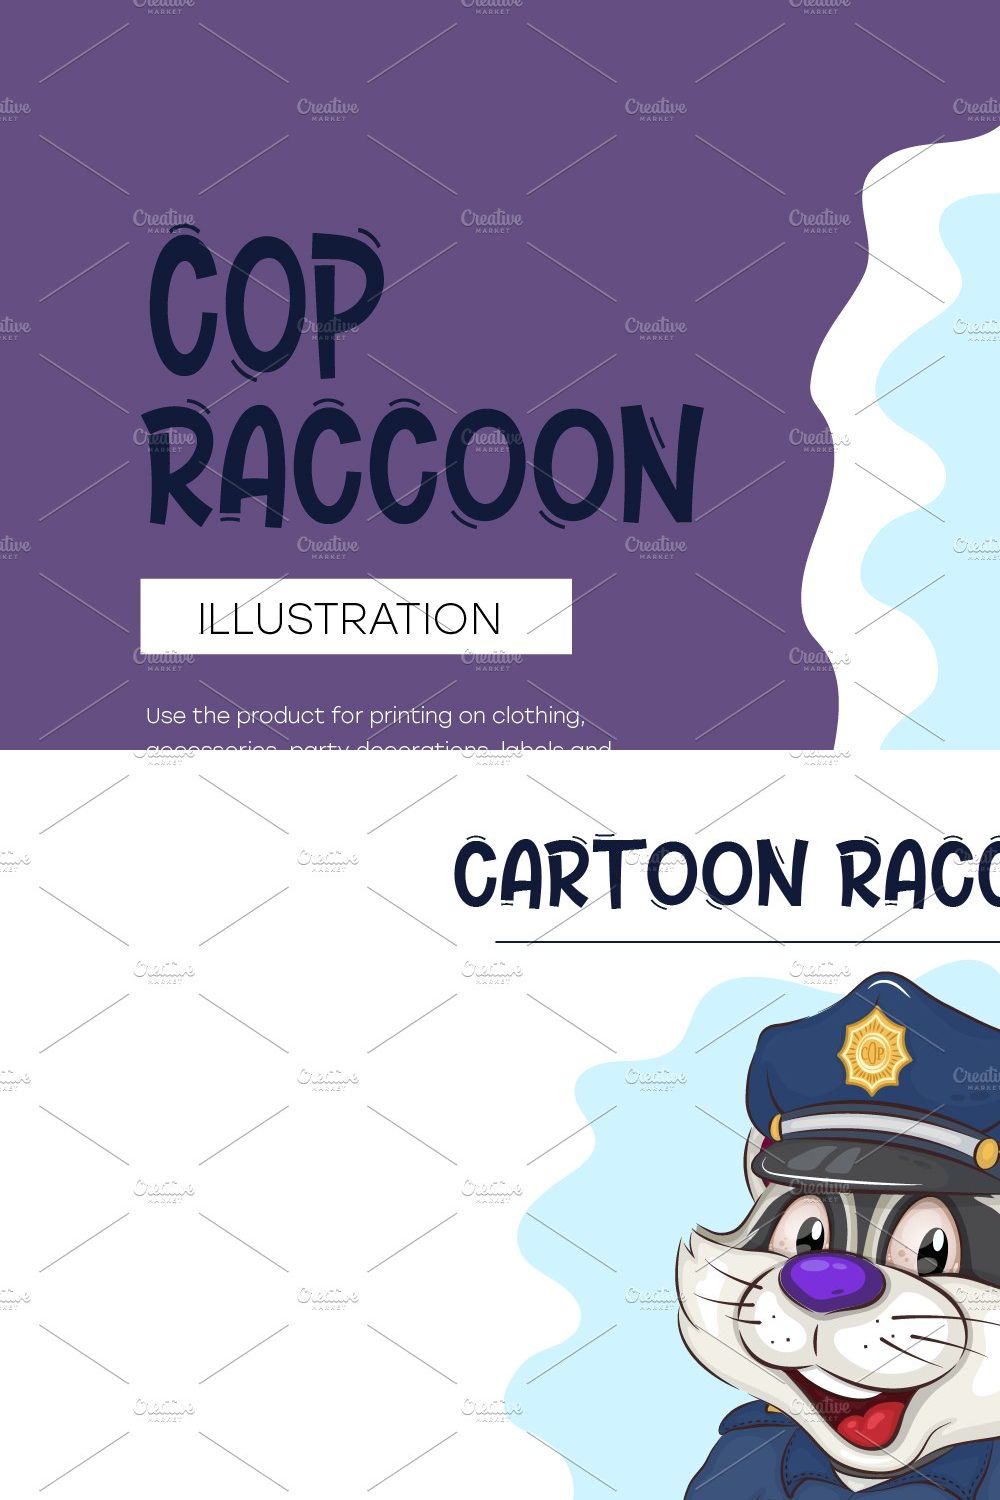 Cartoon Raccoon Cop. SVG, PNG. pinterest preview image.